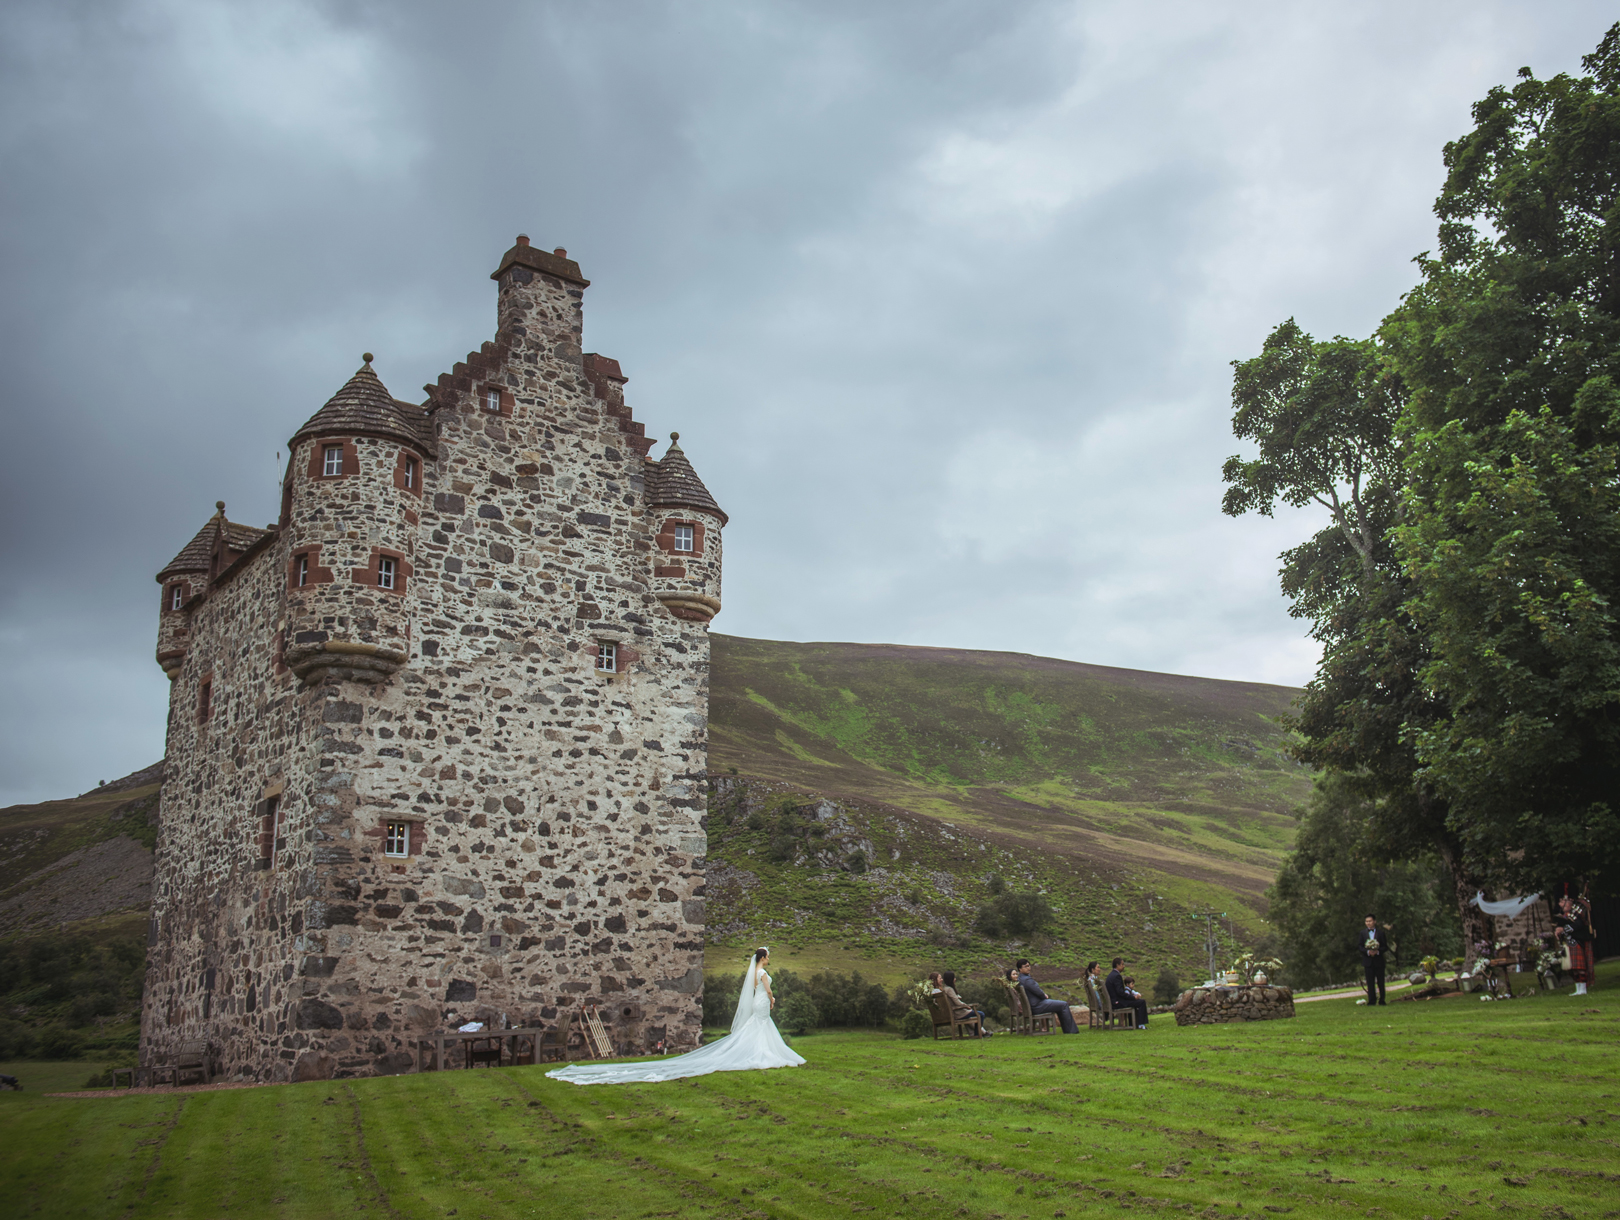 Weddings at Forter Castle